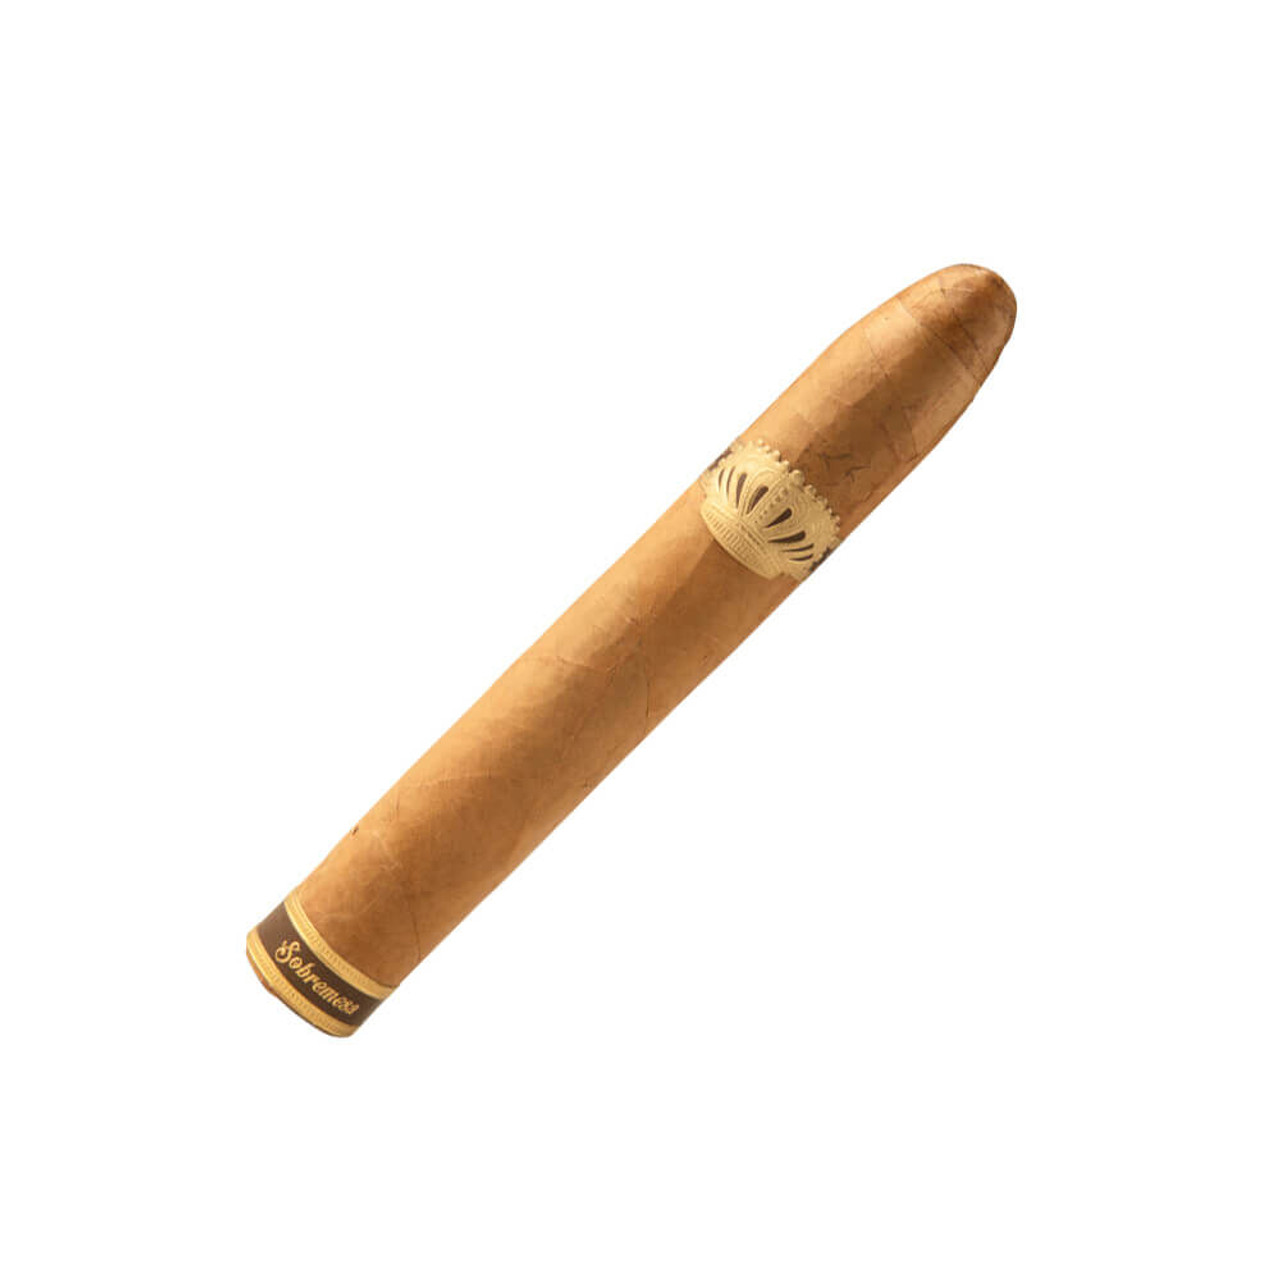 Sobremesa Brulee Gordo 2019 Cigars - 6.25 x 60 Single